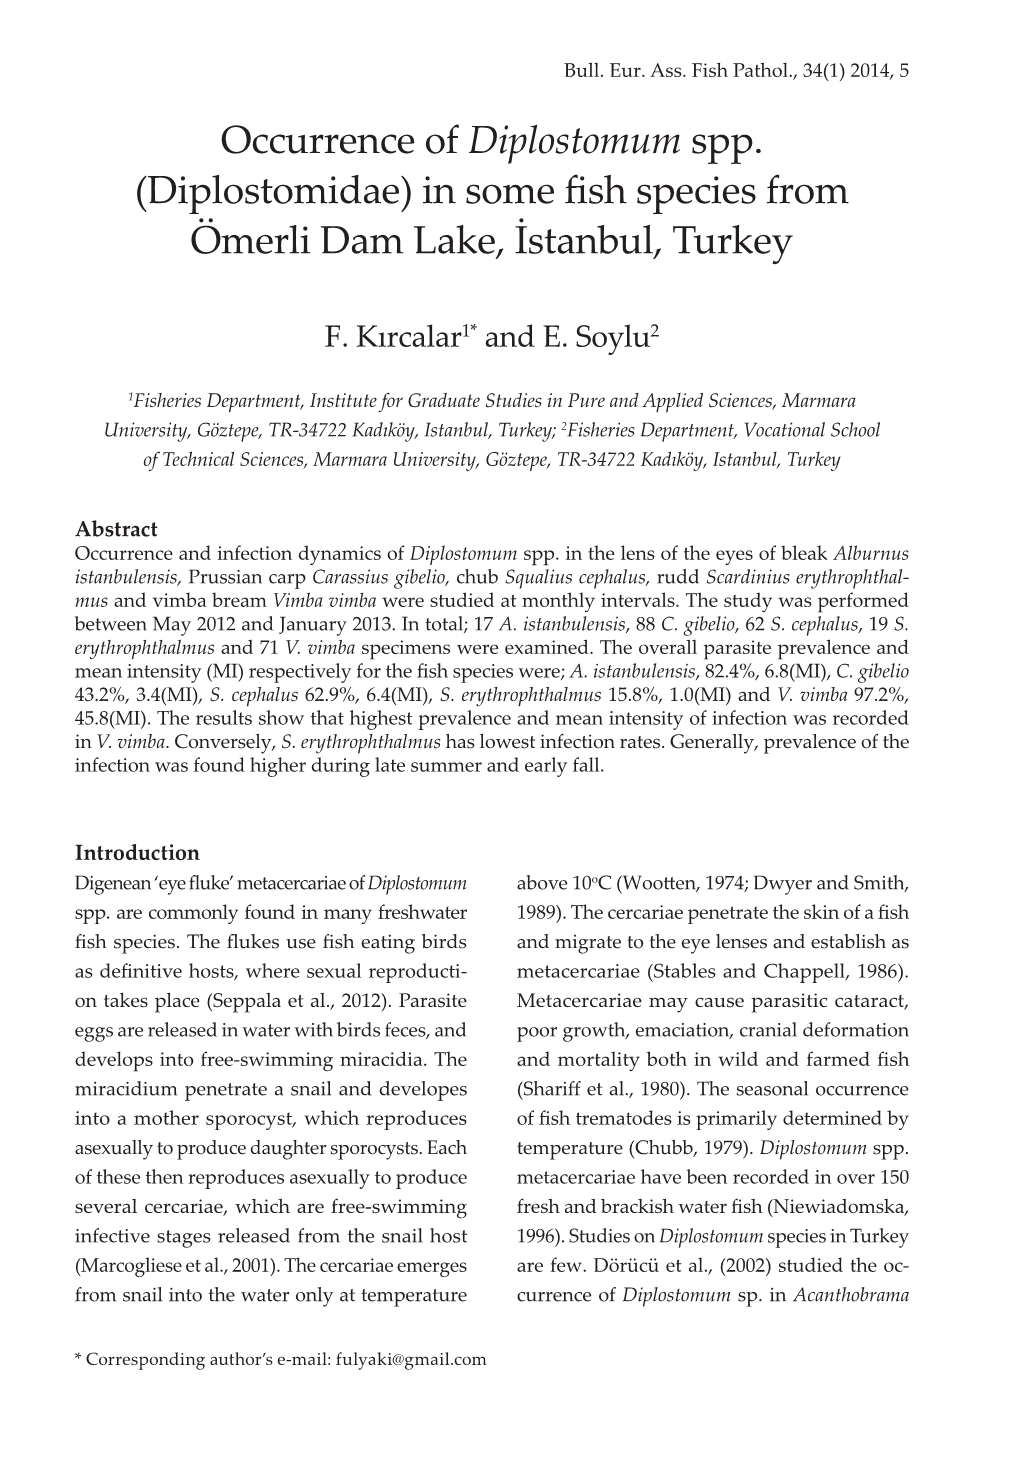 Occurrence of Diplostomum Spp. (Diplostomidae) in Some Fish Species from Ömerli Dam Lake, İstanbul, Turkey